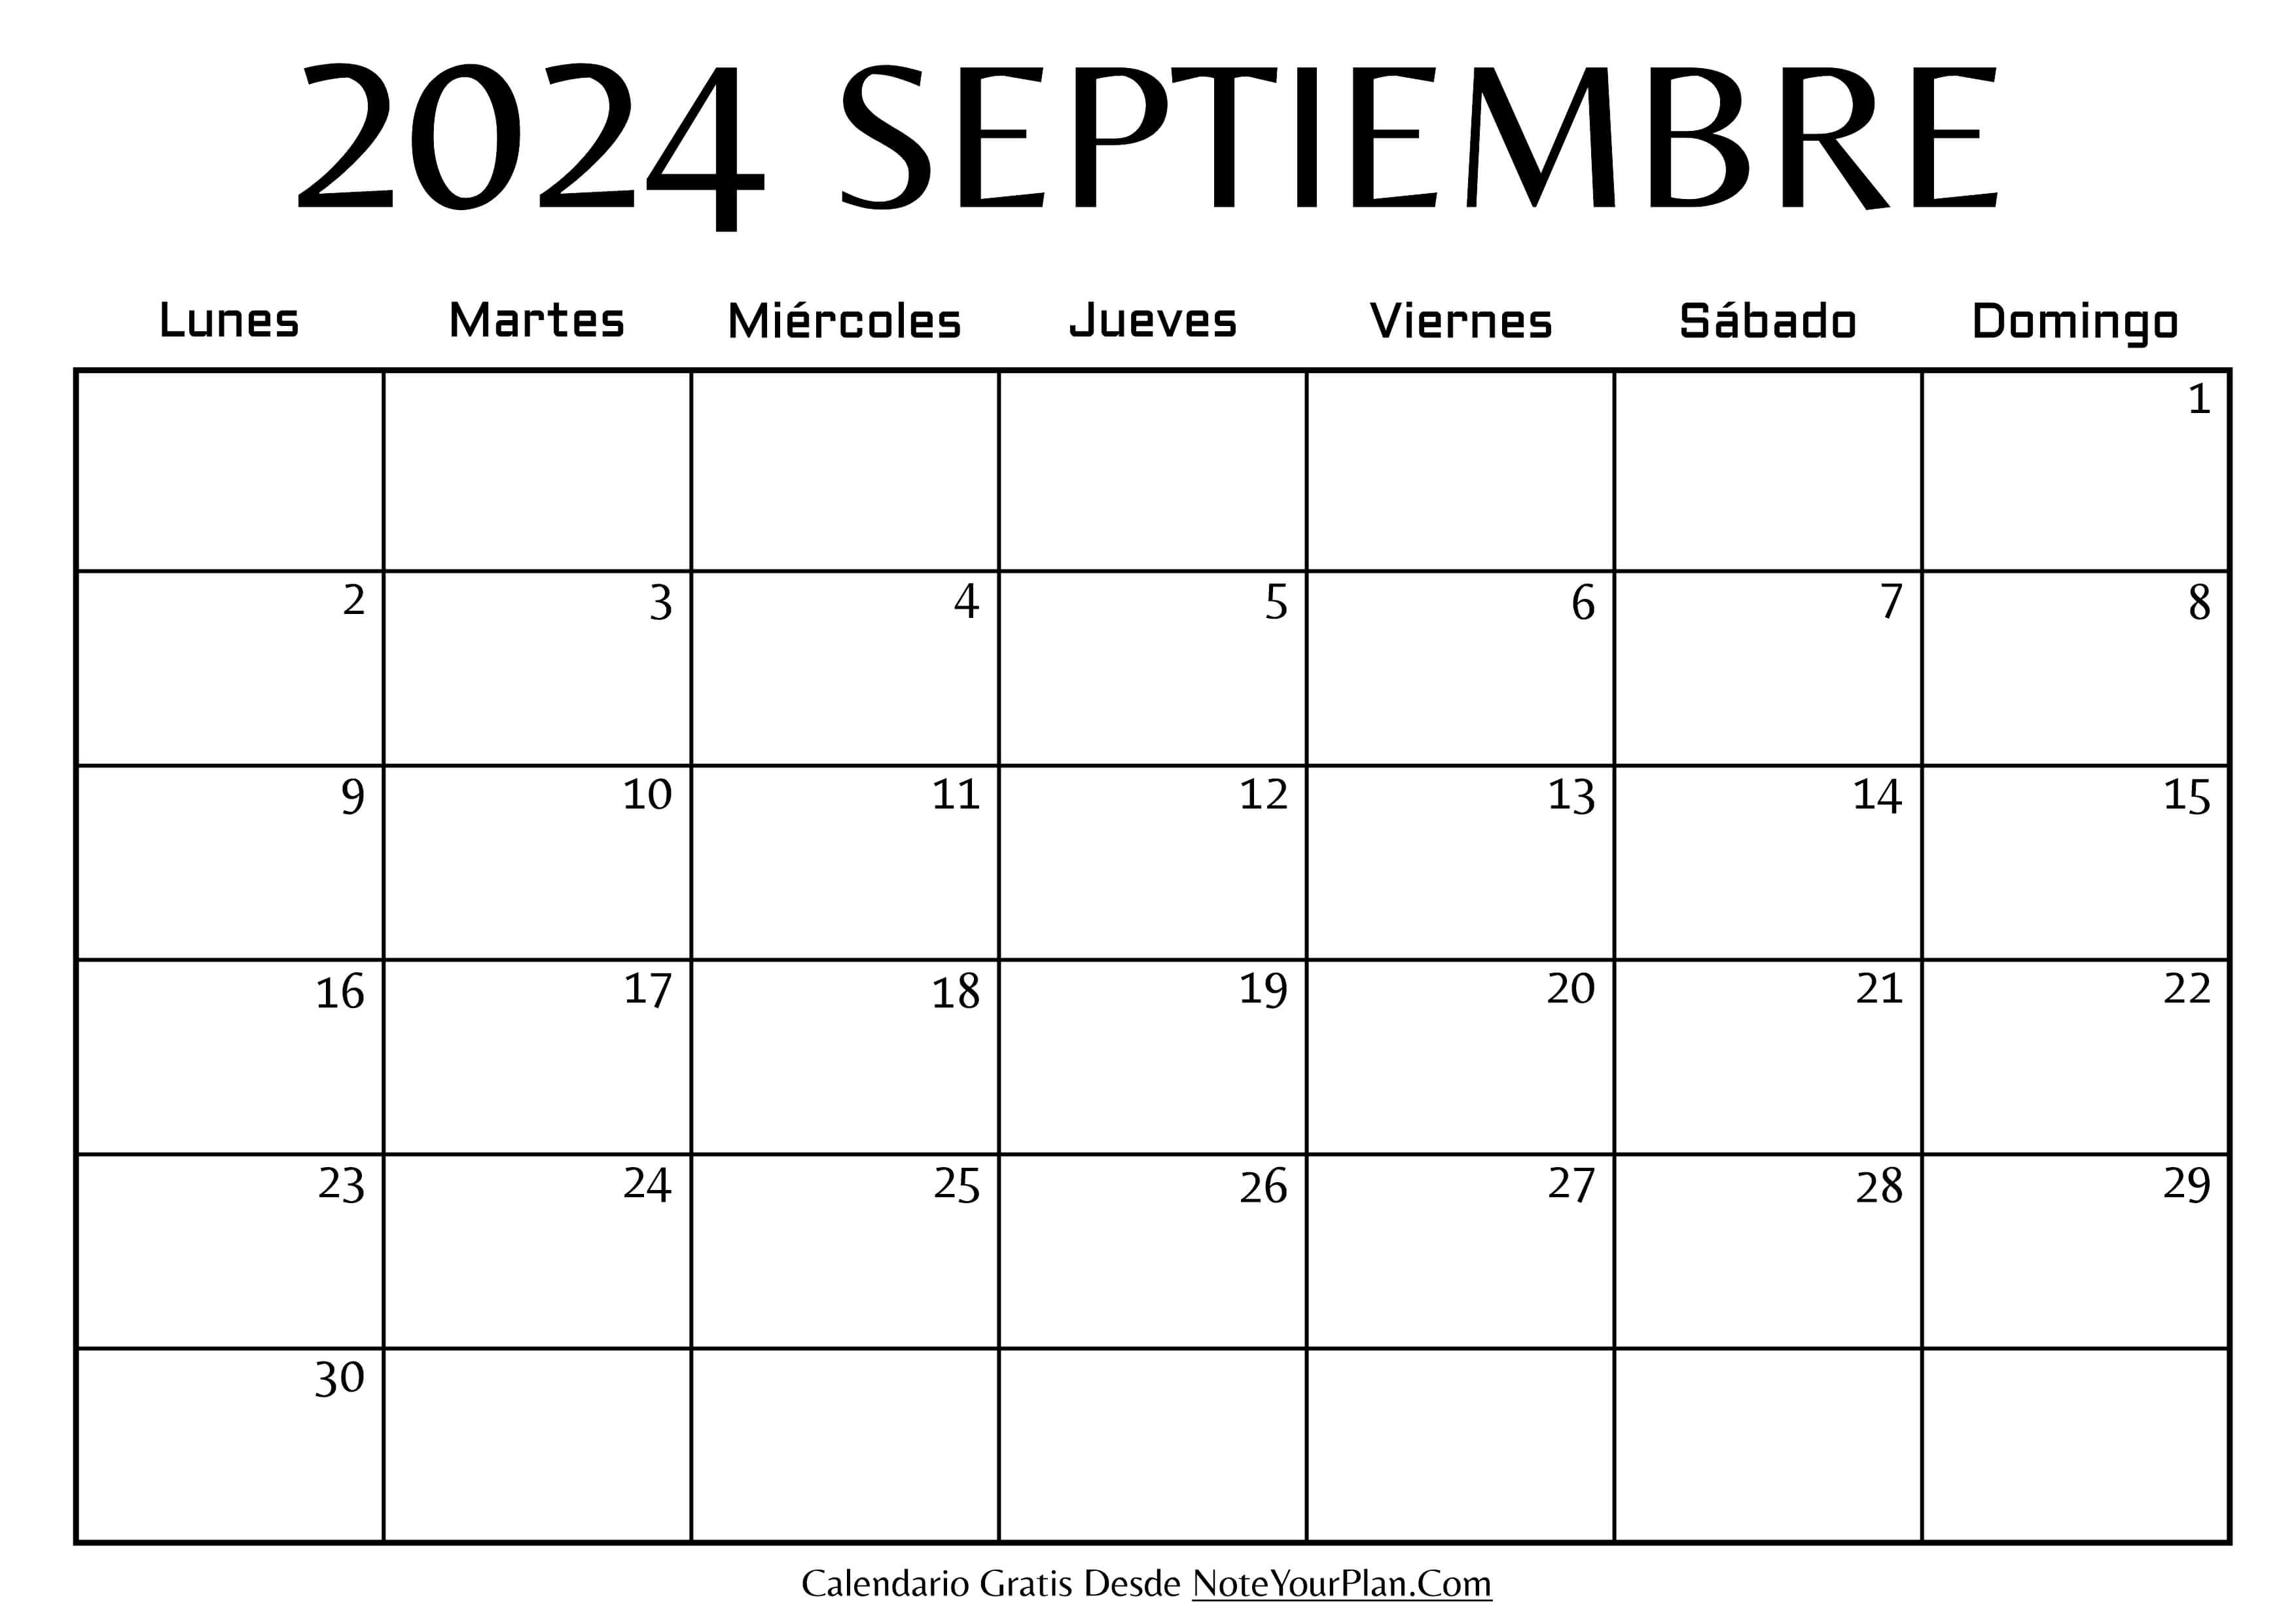 Calendario en blanco de Septiembre